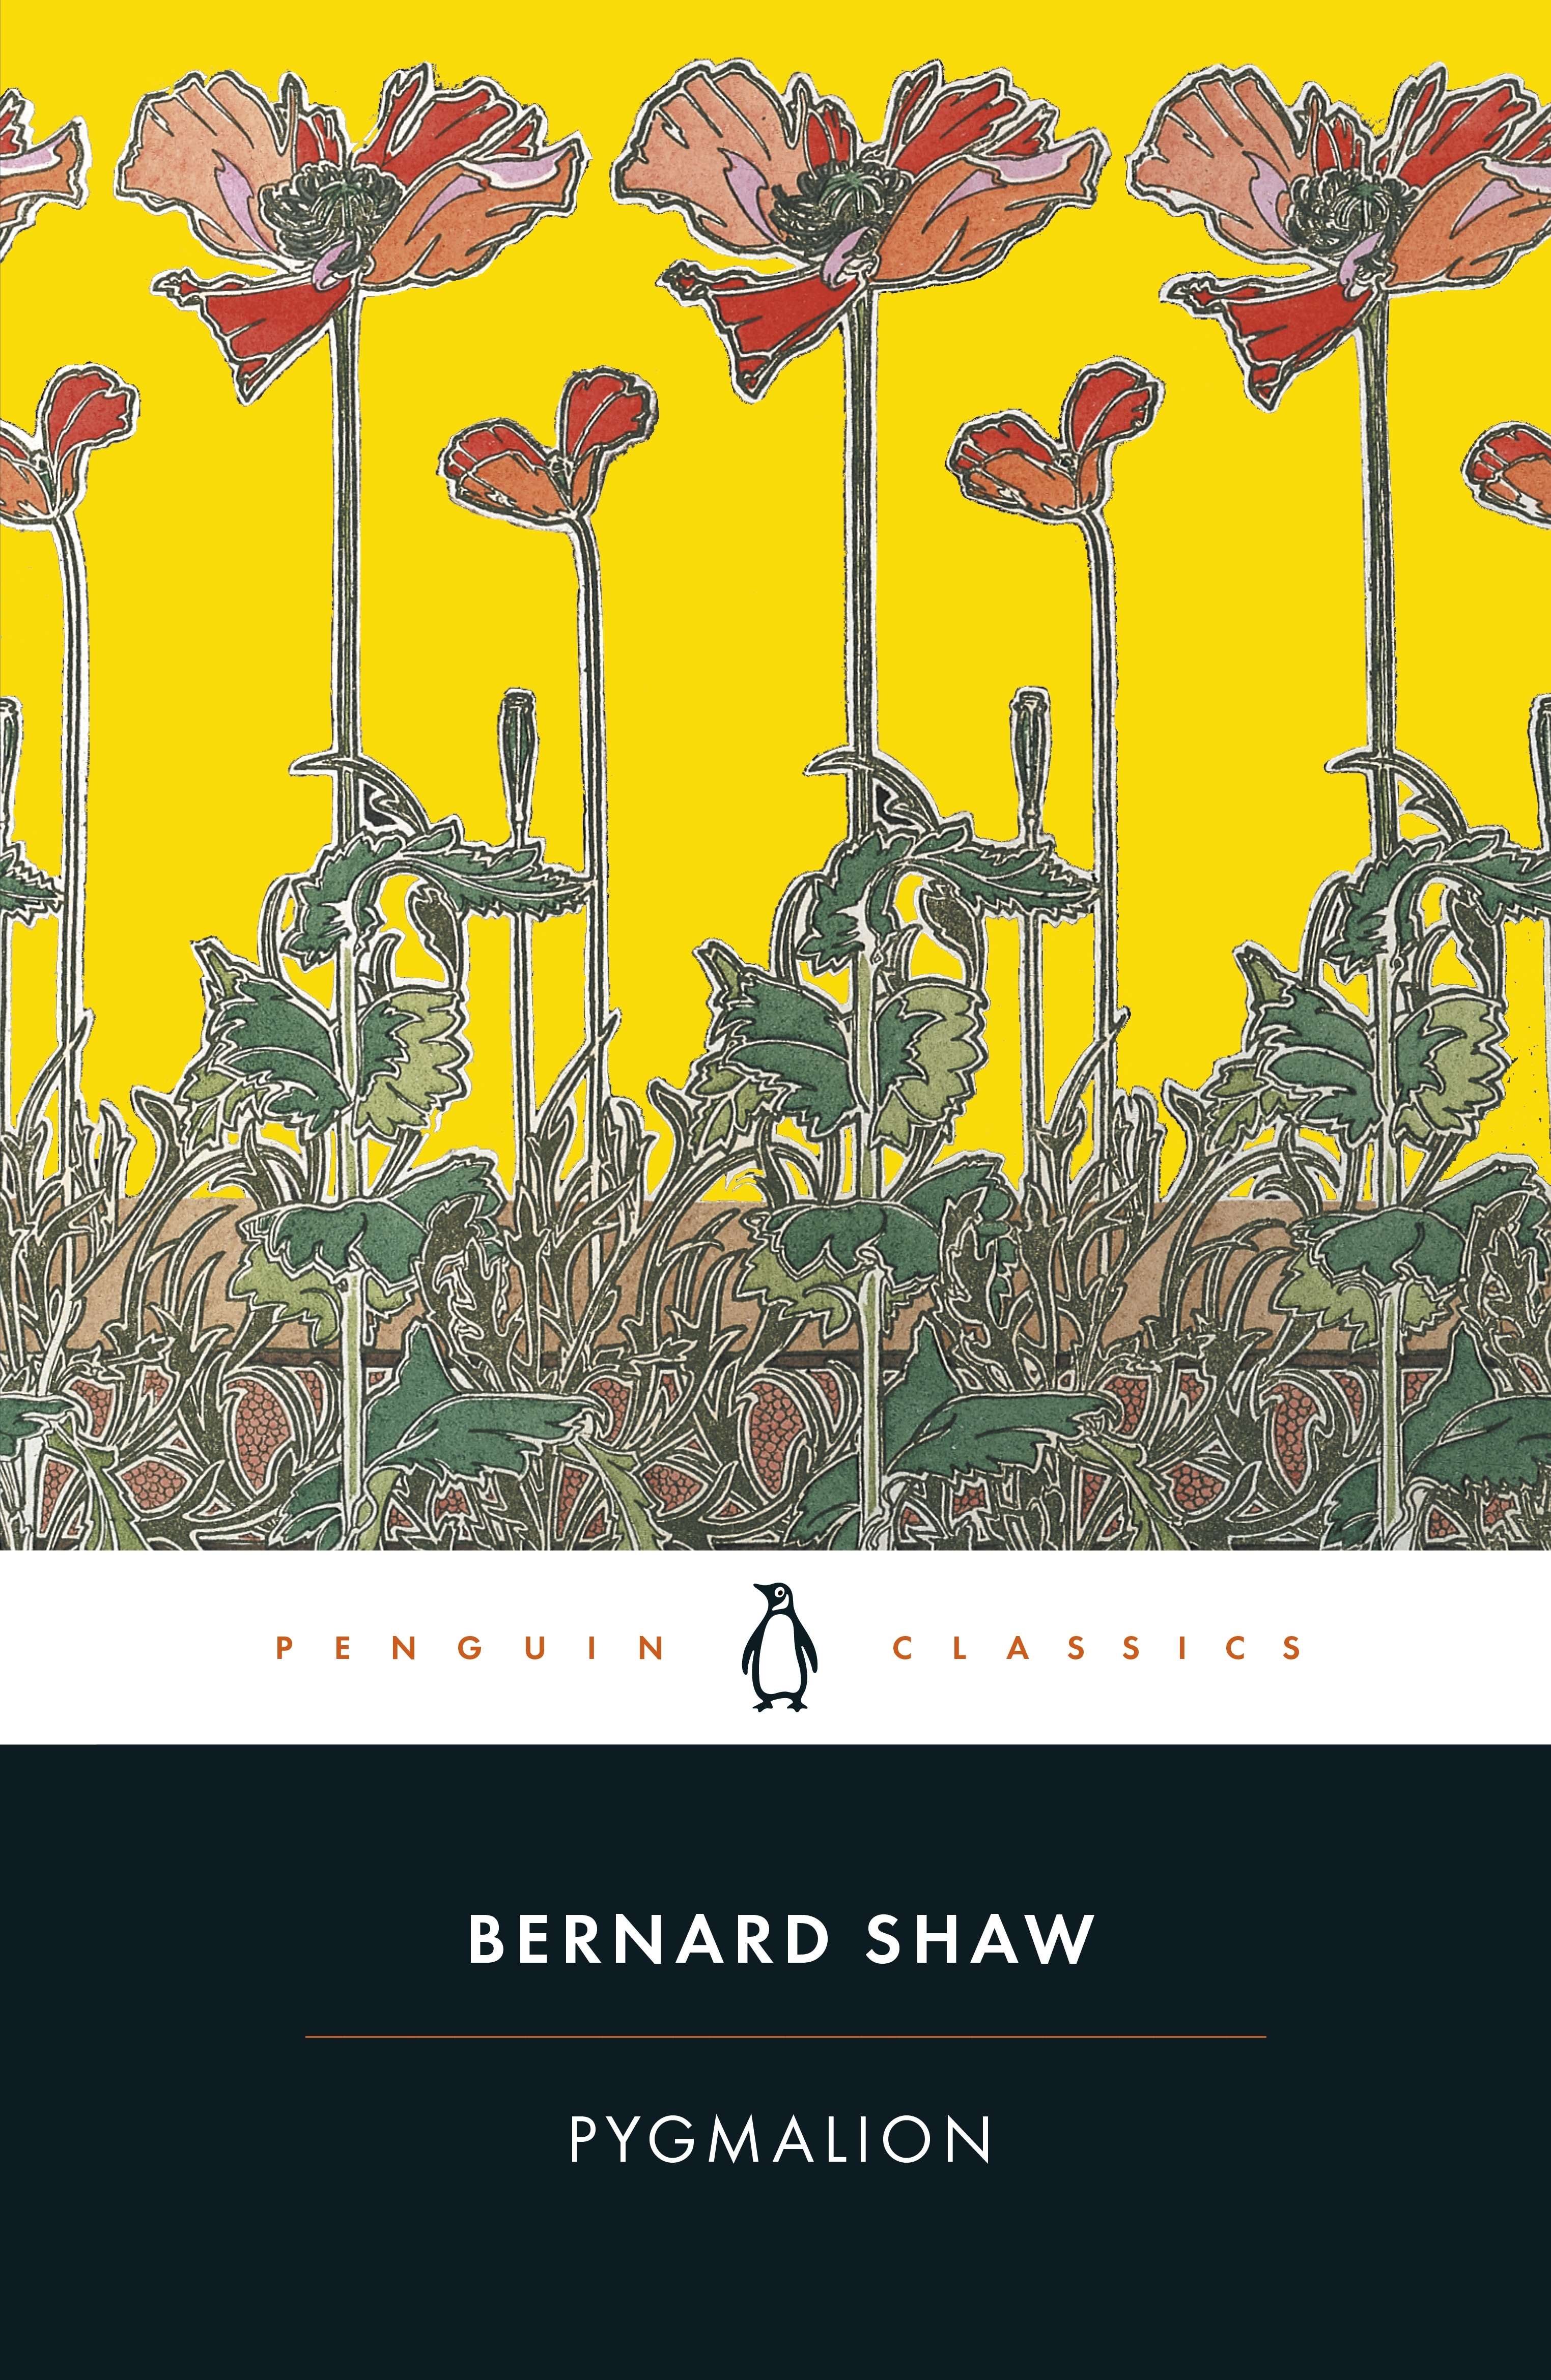 Book “Pygmalion” by George Bernard Shaw, Nicholas Grene — January 30, 2003